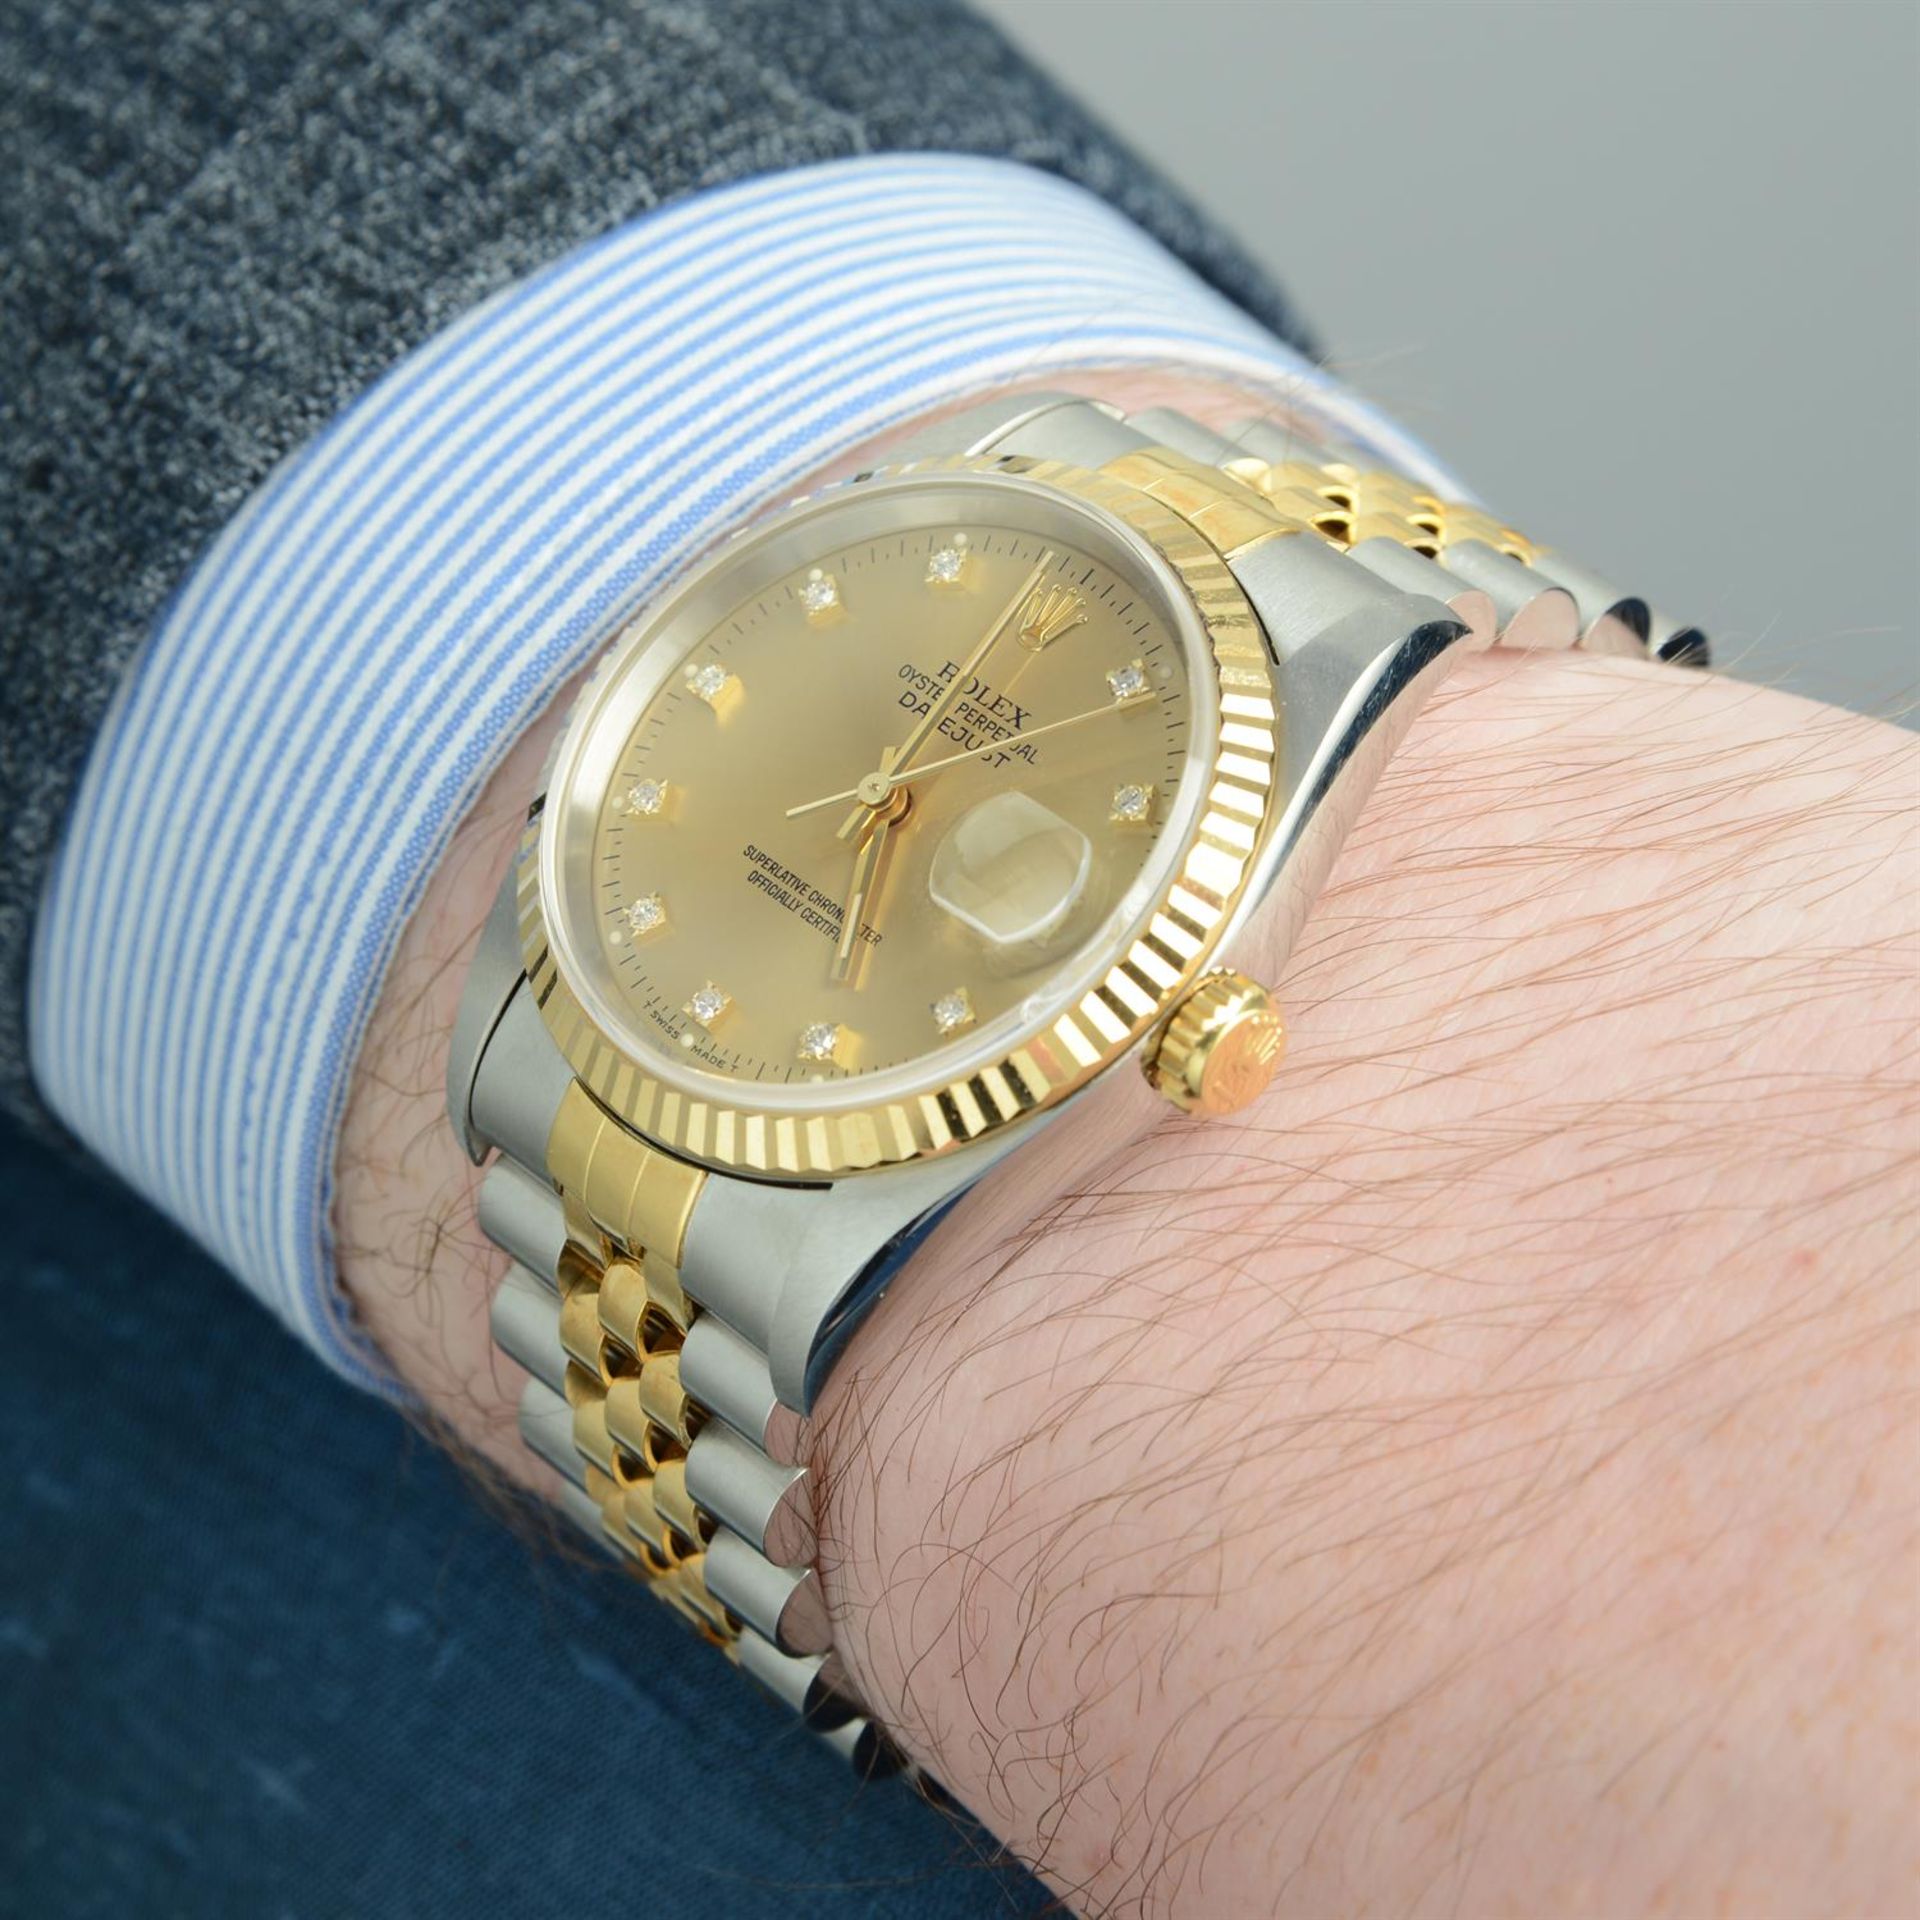 ROLEX - a bi-metal Oyster Perpetual Datejust bracelet watch, 36mm. - Image 6 of 6